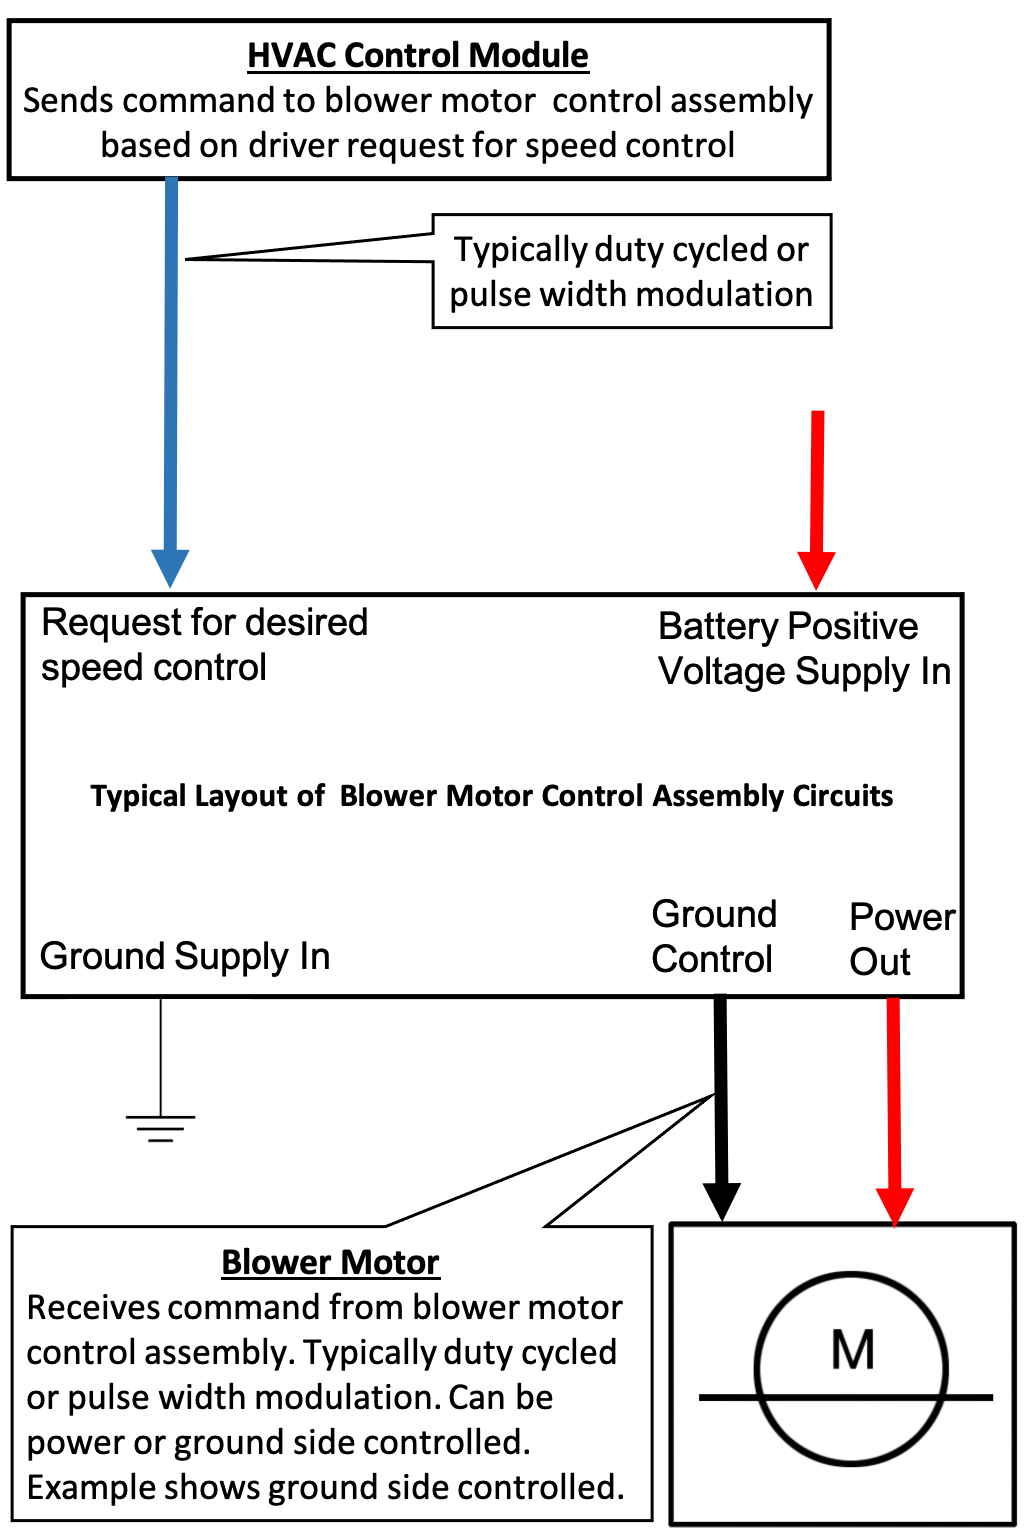 Blower Motor Resistor Operation